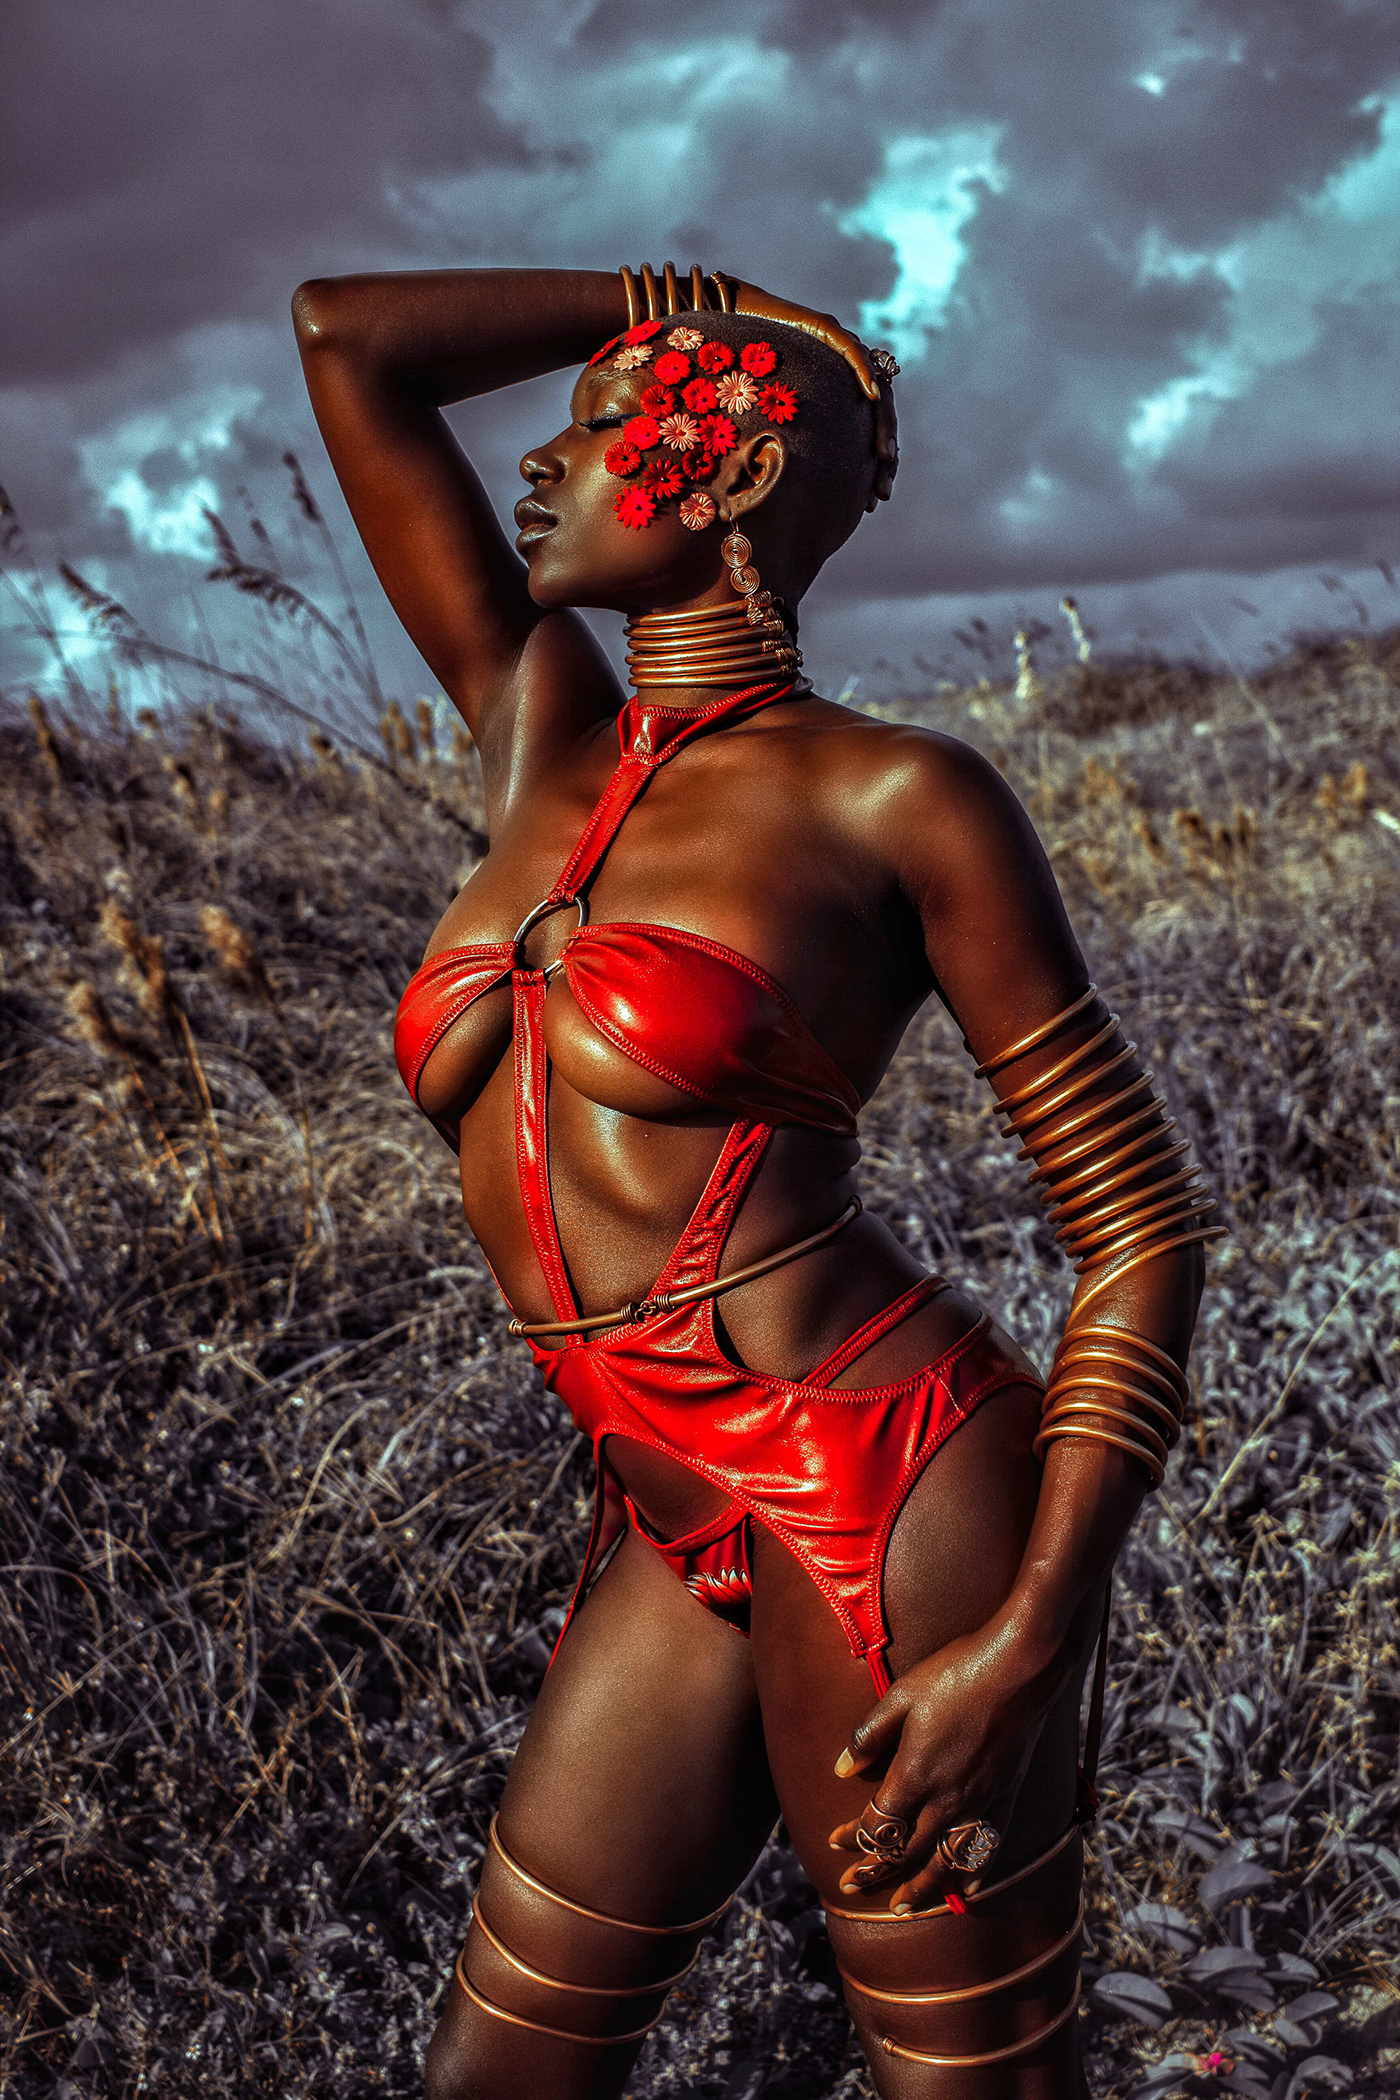 goddess collective Goddess series free the bush free the nipple intimacy warrior wakanda black melanin black empowerment